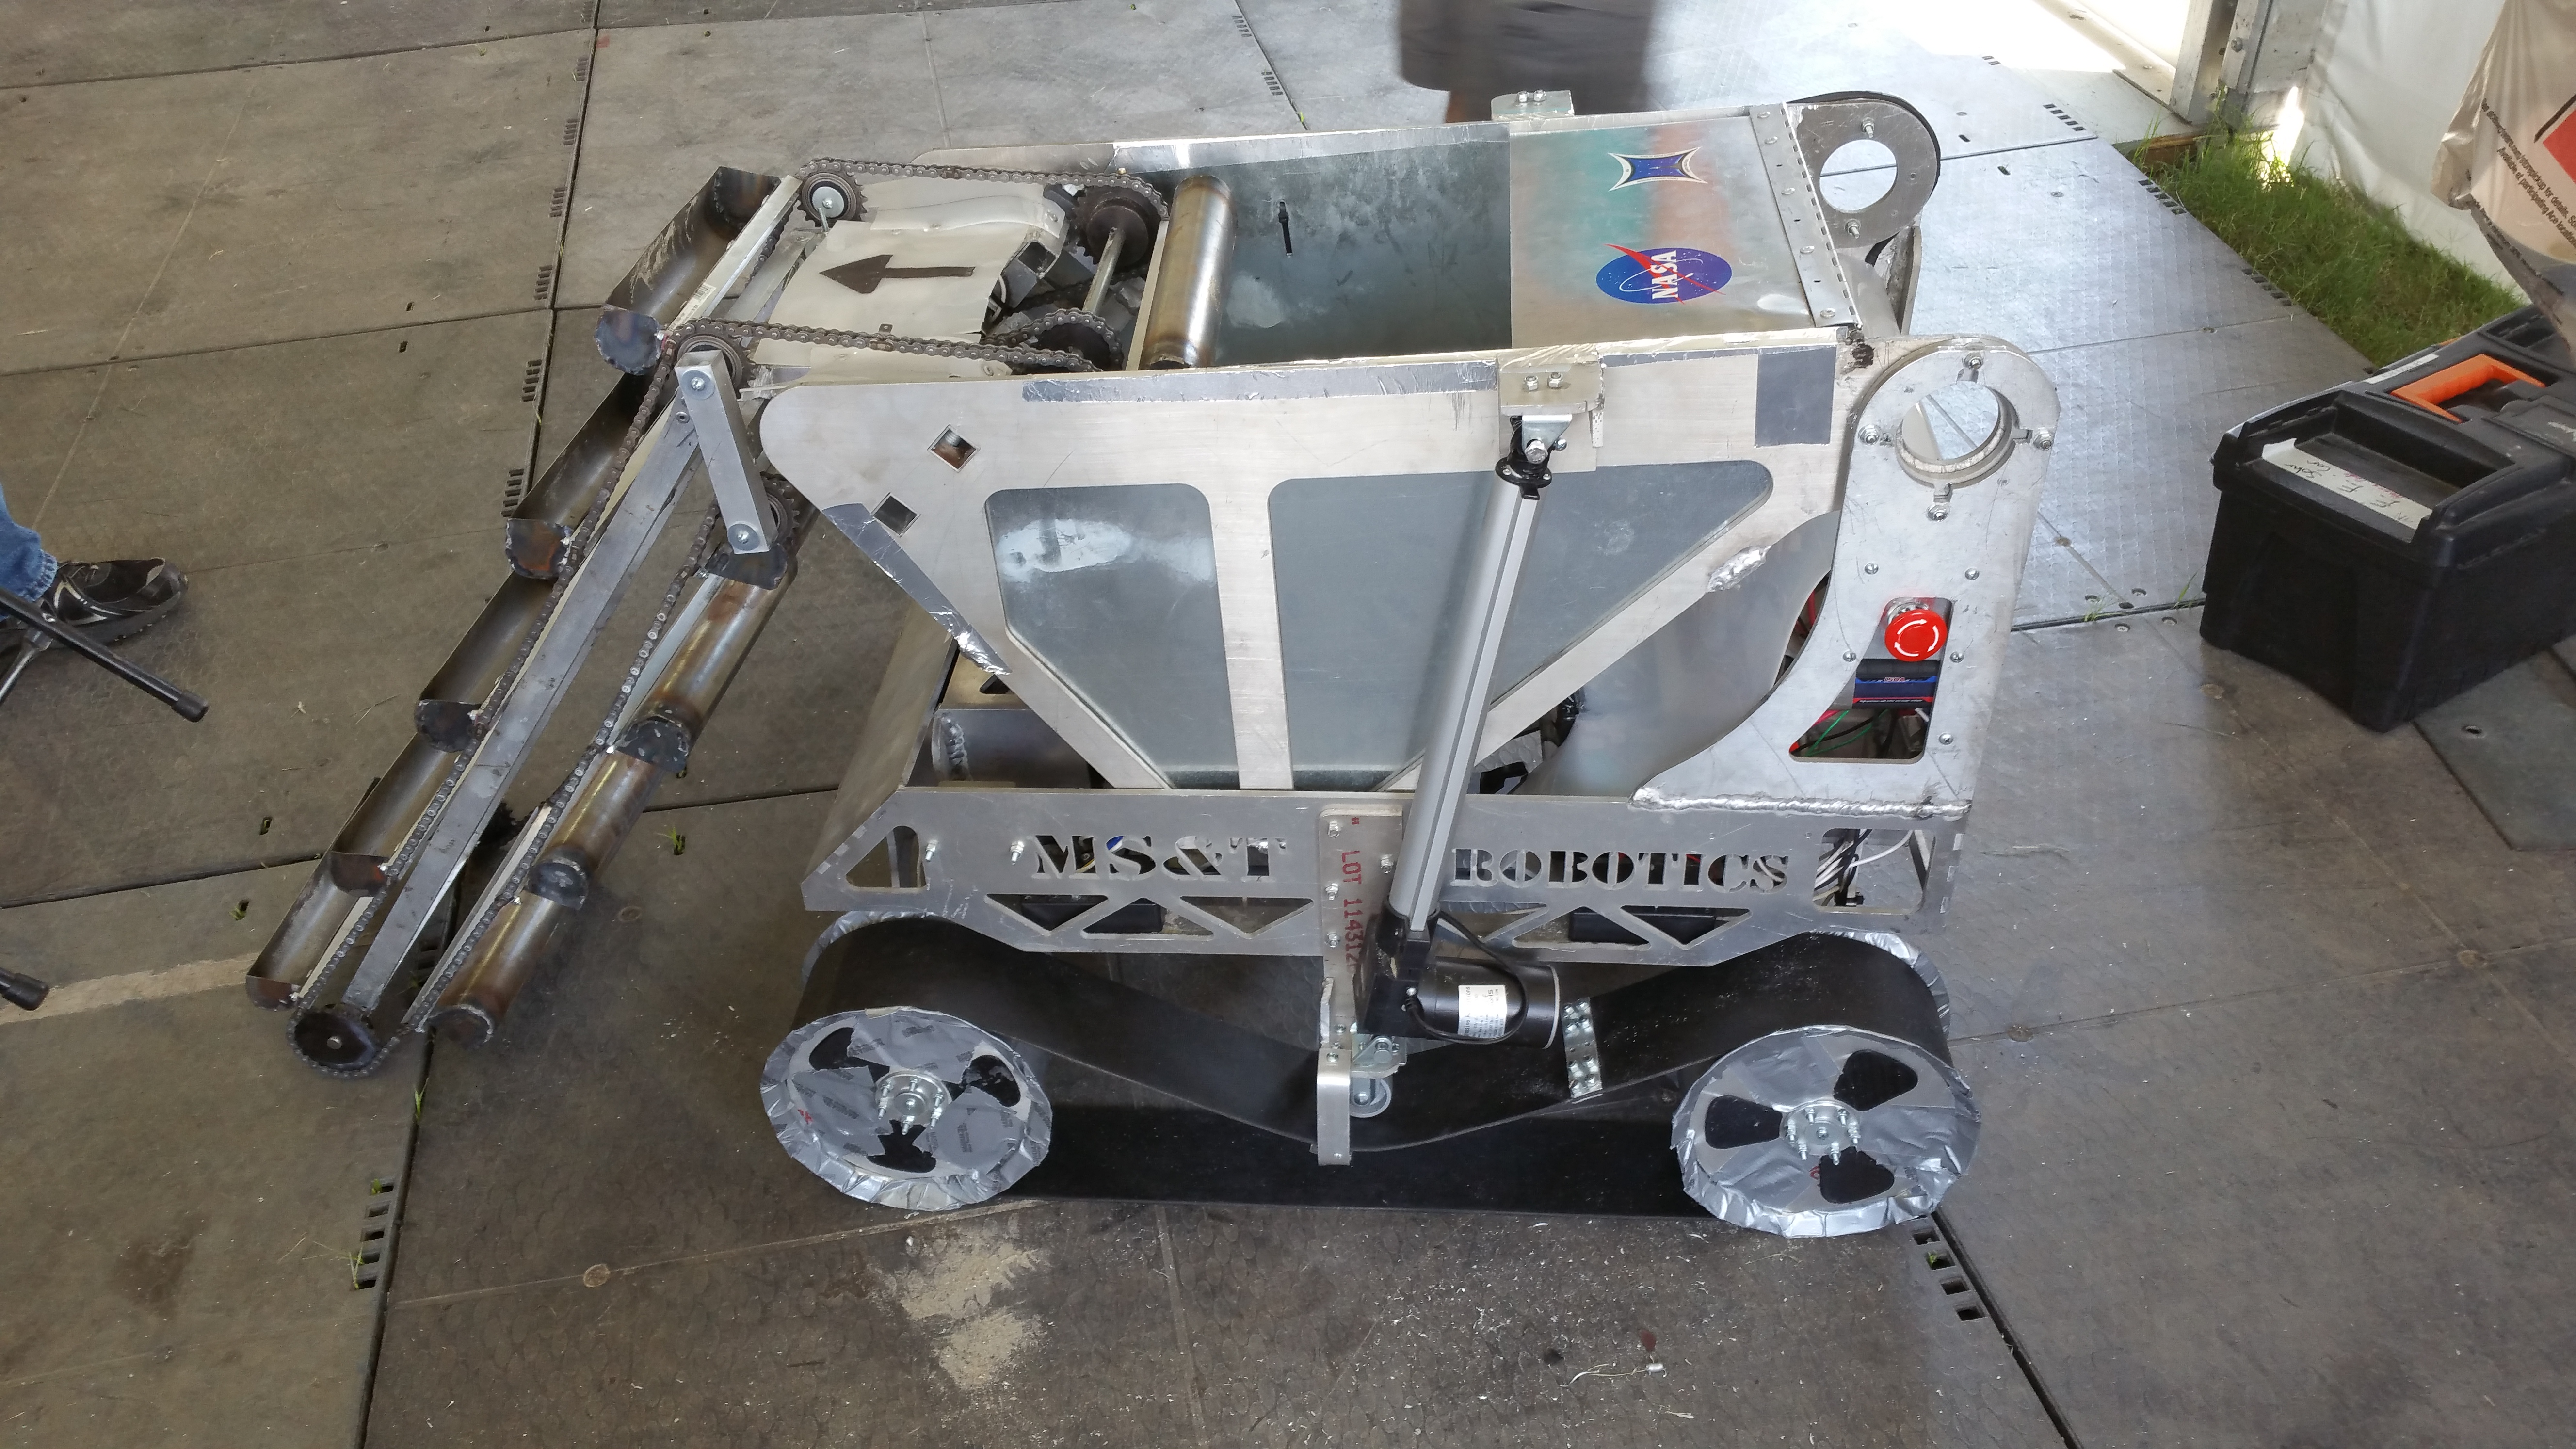 NASA Robotic Mining Competition 2015